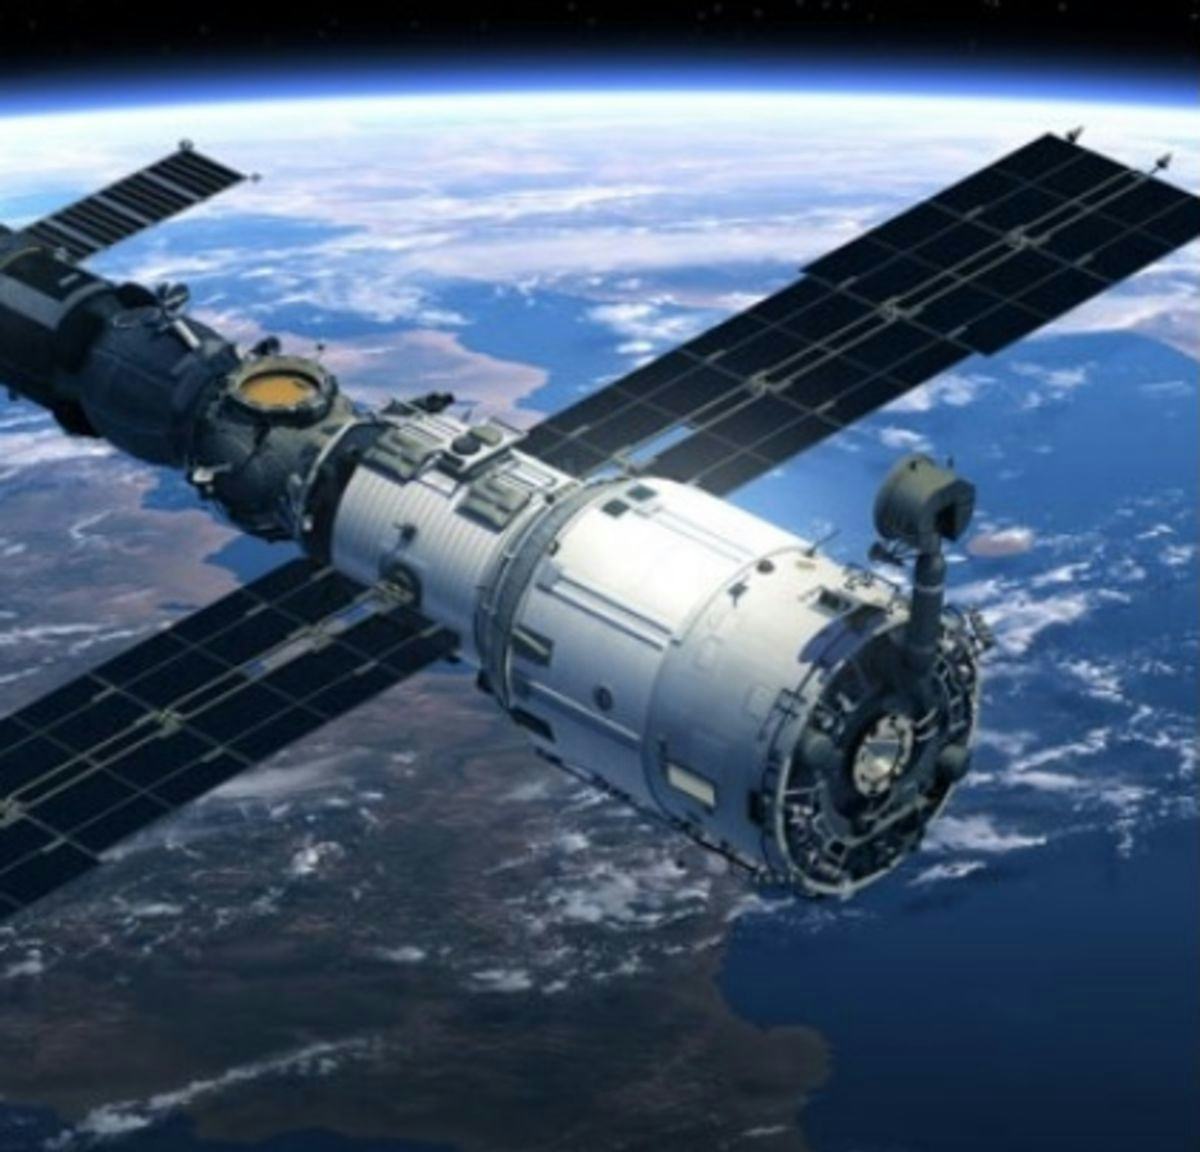 Satellite in Space - Stevens Systems Engineering